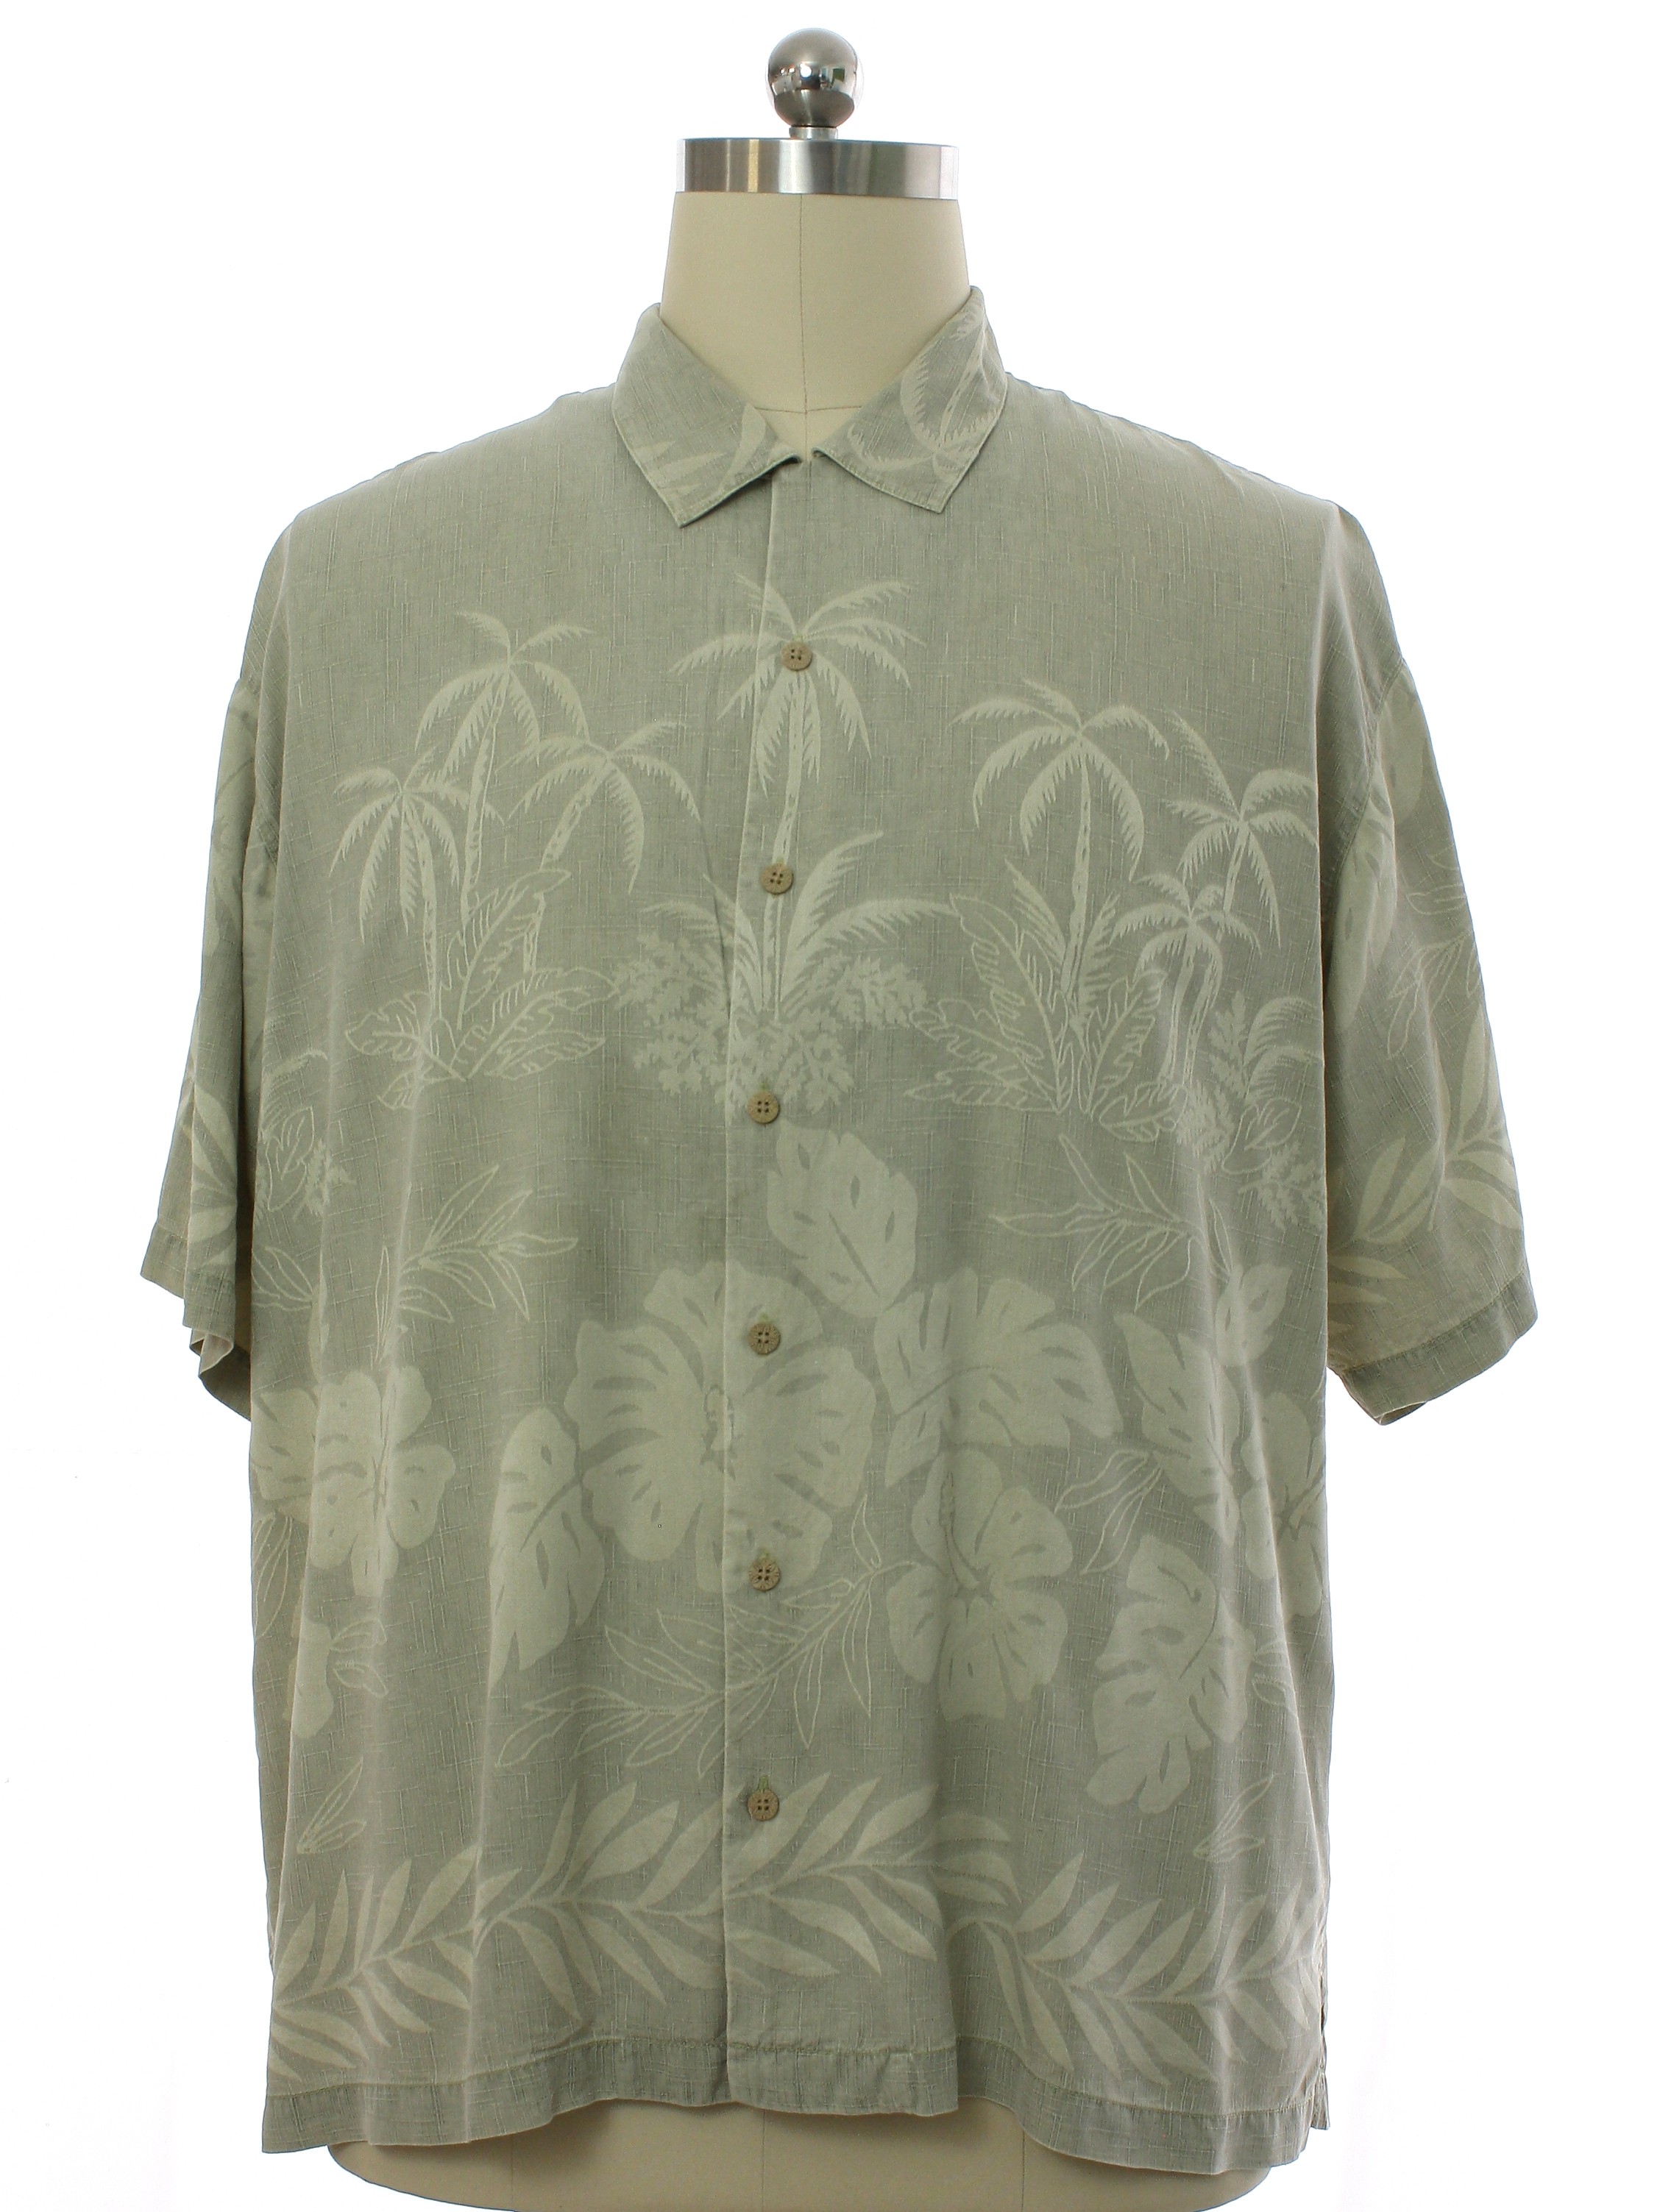 90's Vintage Hawaiian Shirt: 90s -Reyn Spooner- Mens ivory